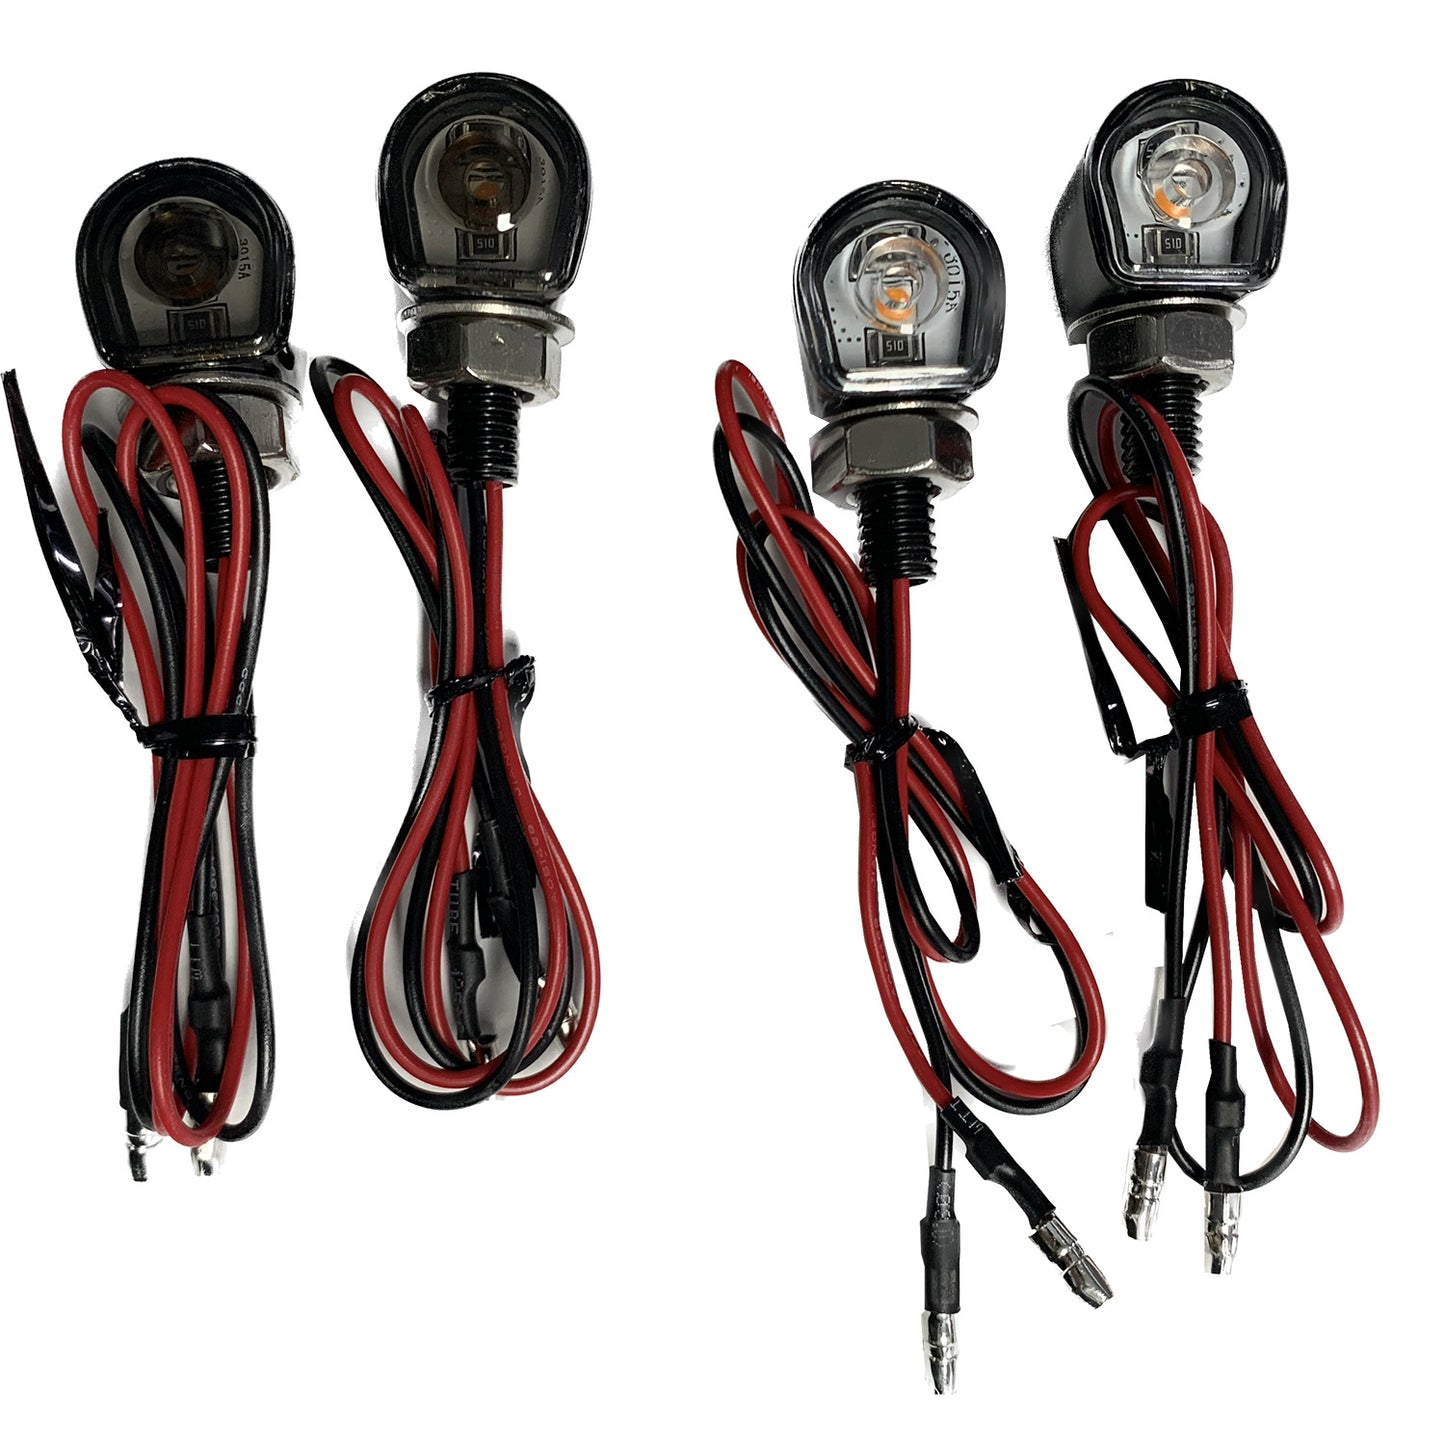 2 x Motorcycle LED Turn Signal Lights Amber Indicators Mini Blinkers Universal Tinted Black/Clear